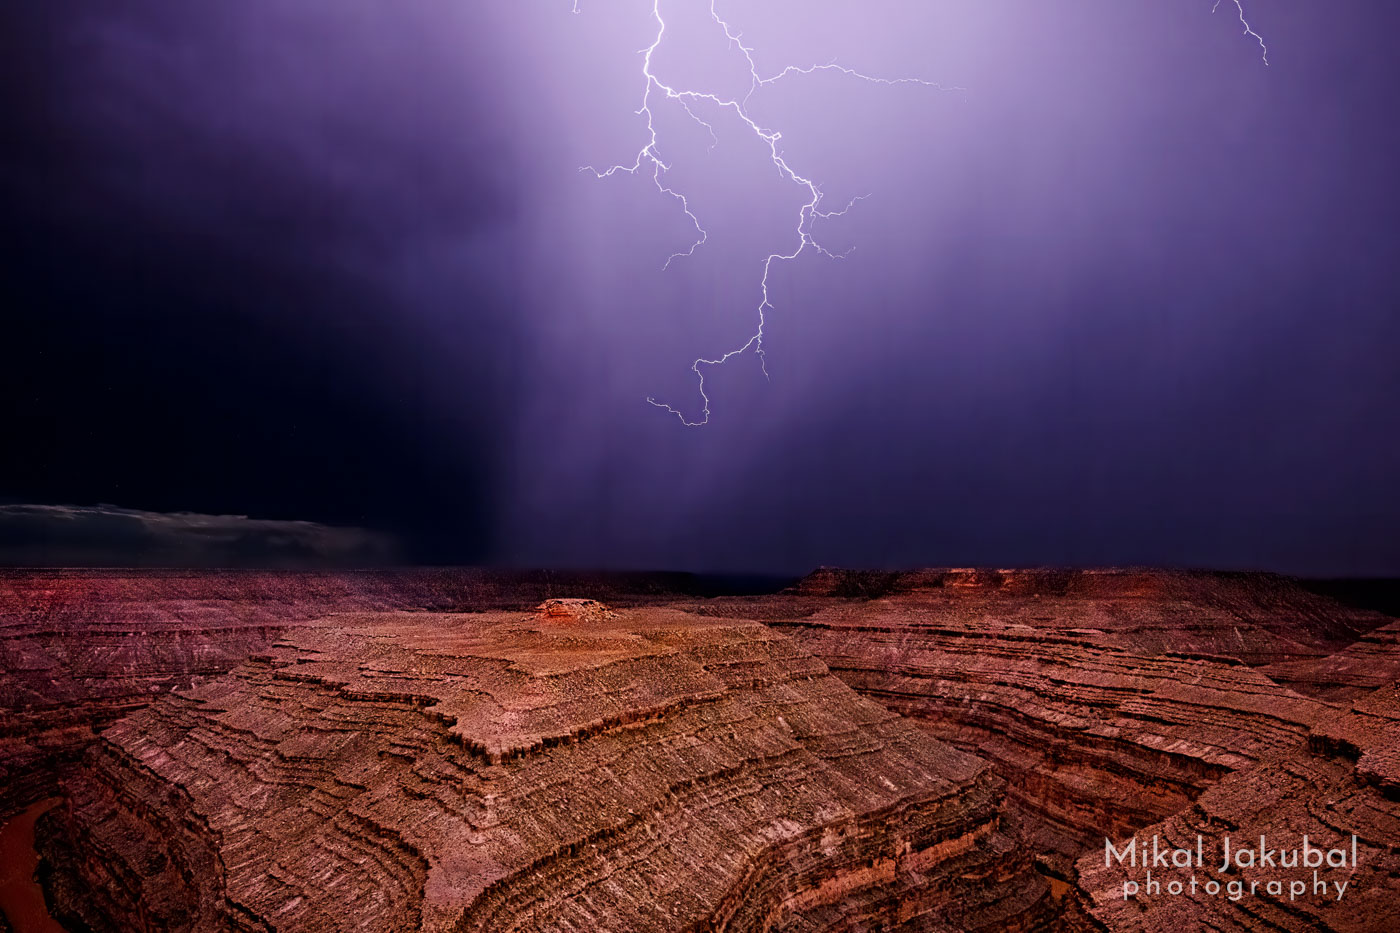 A bold of lightning descends through purple clouds at night, illuminating a layered bedrock canyon below.